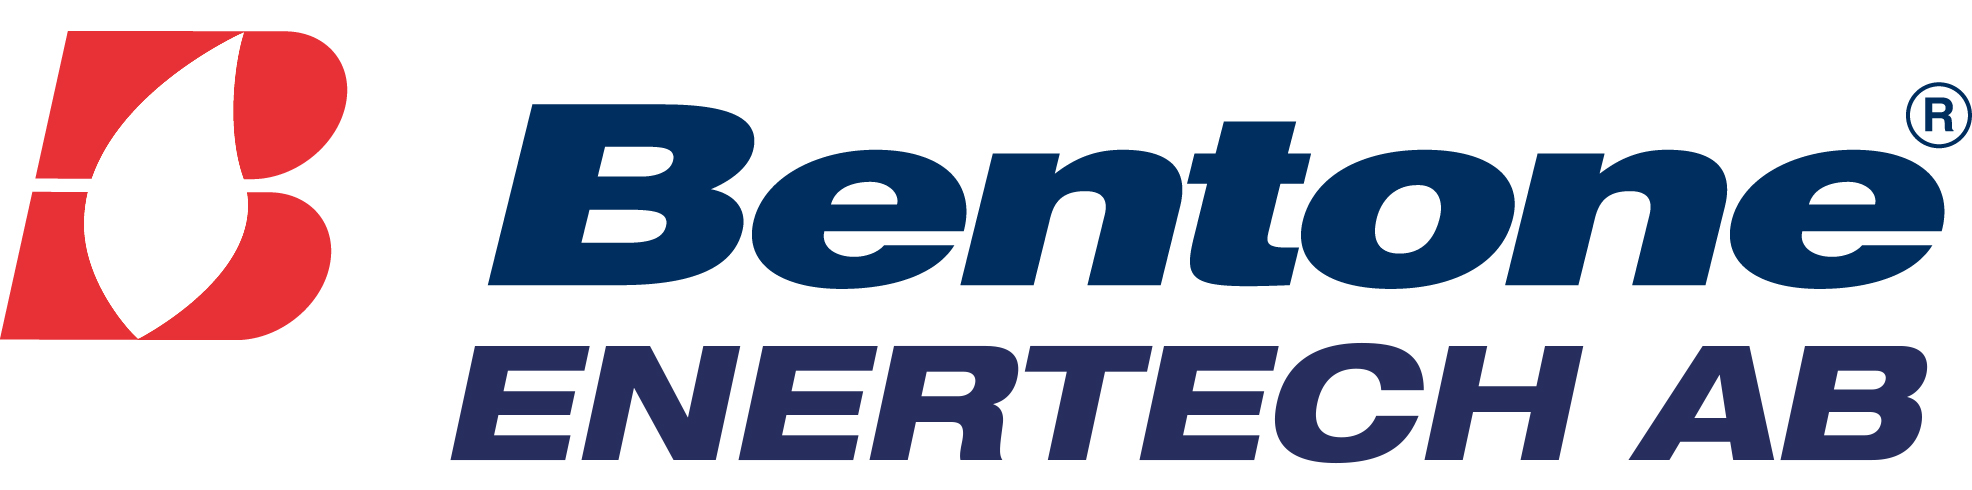 Enertech AB Logo | OnePartnerGroup